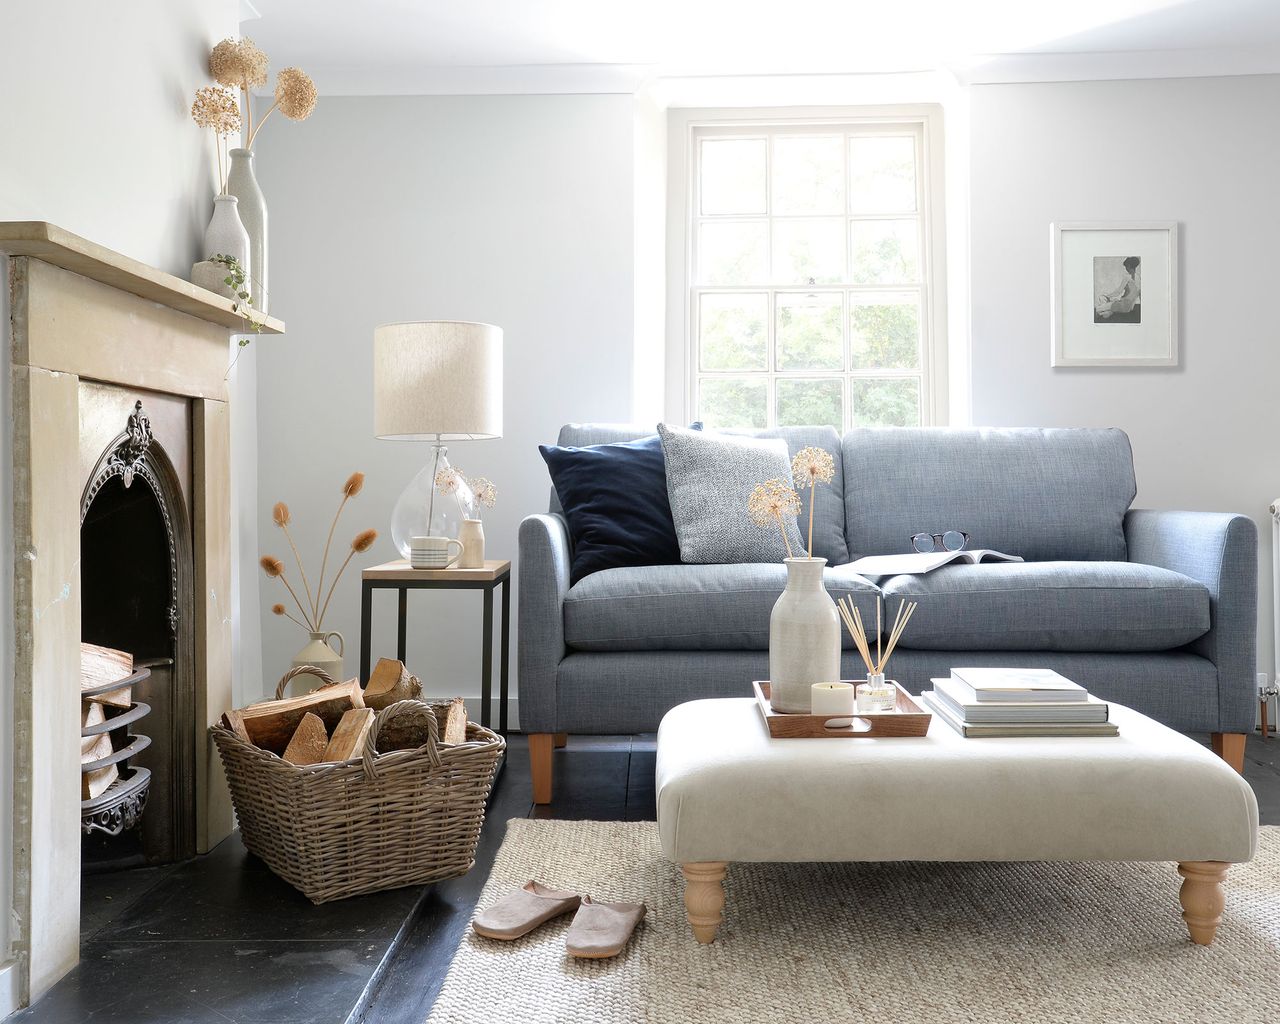 20 Country living room ideas: cozy decor inspiration | Country